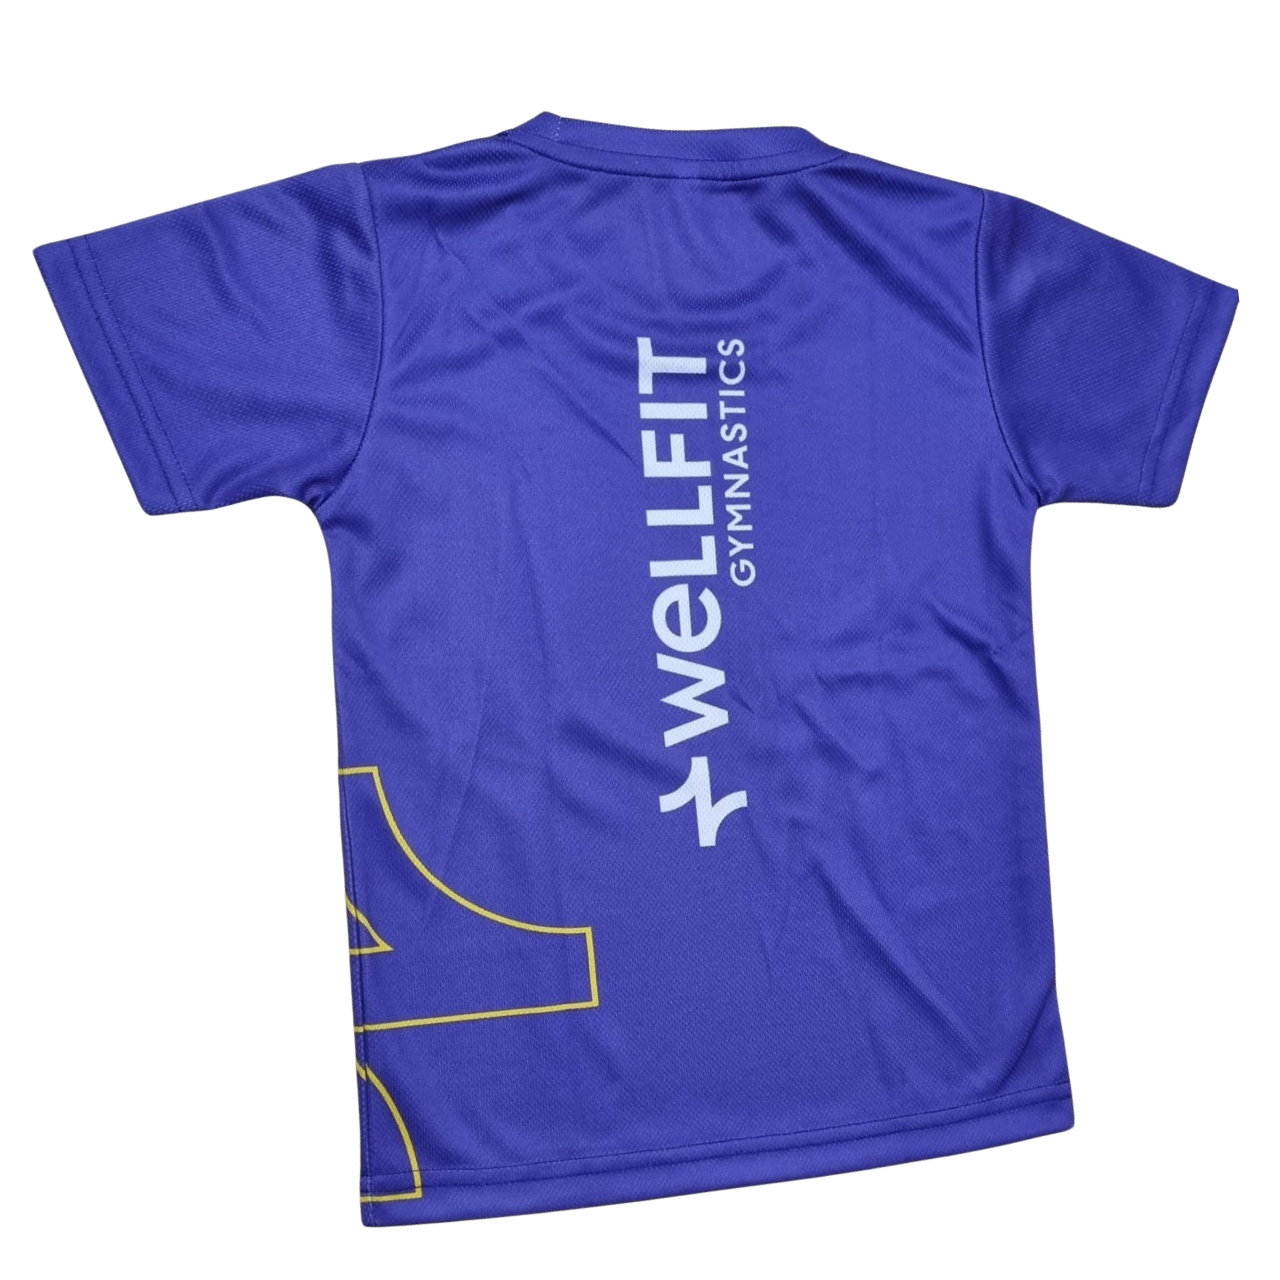 Wellfit Gymnastics Boys T-shirts